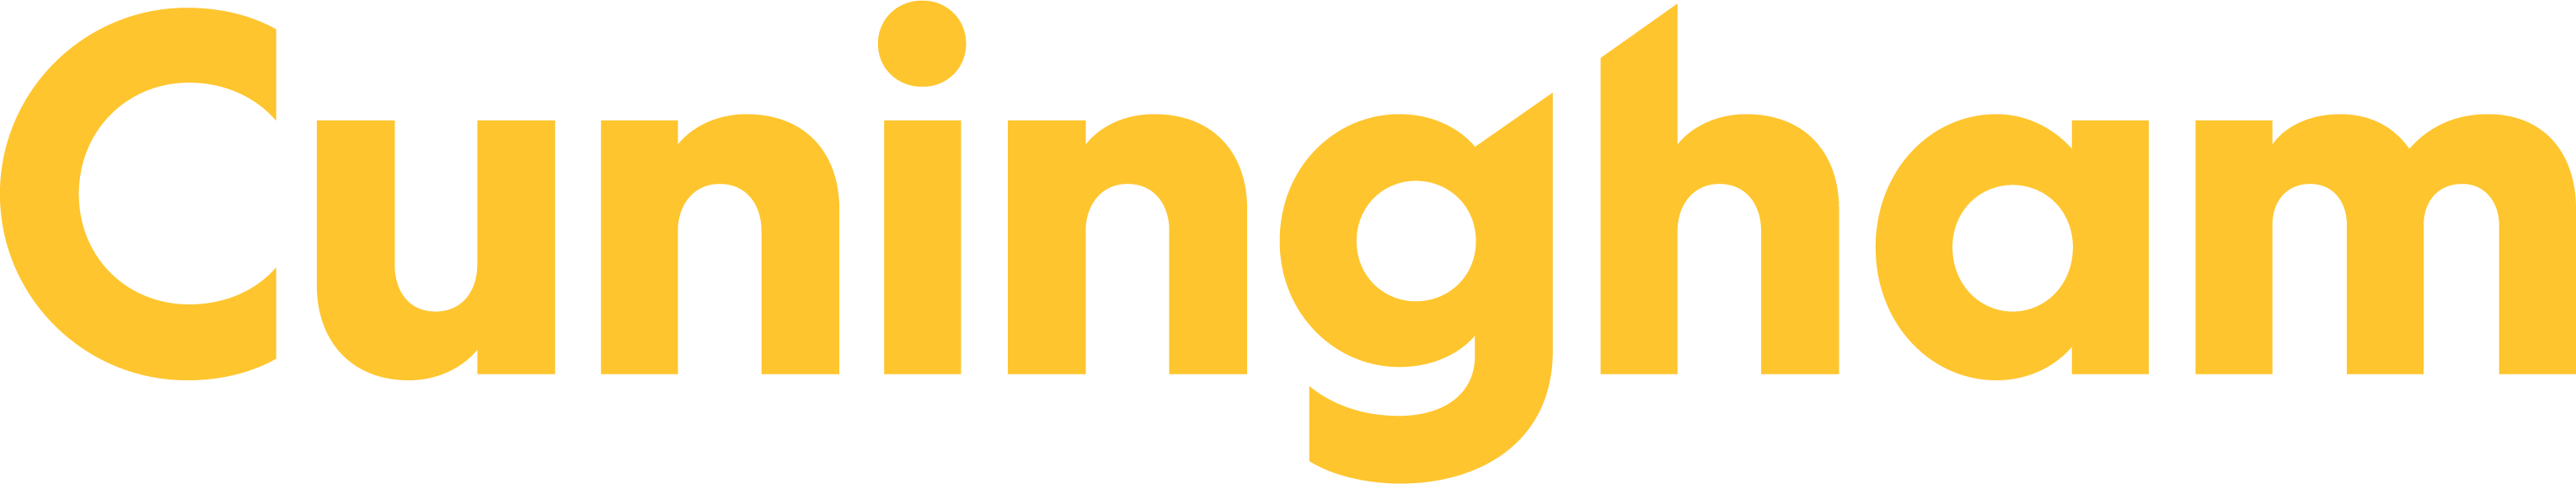 Cuningham logo